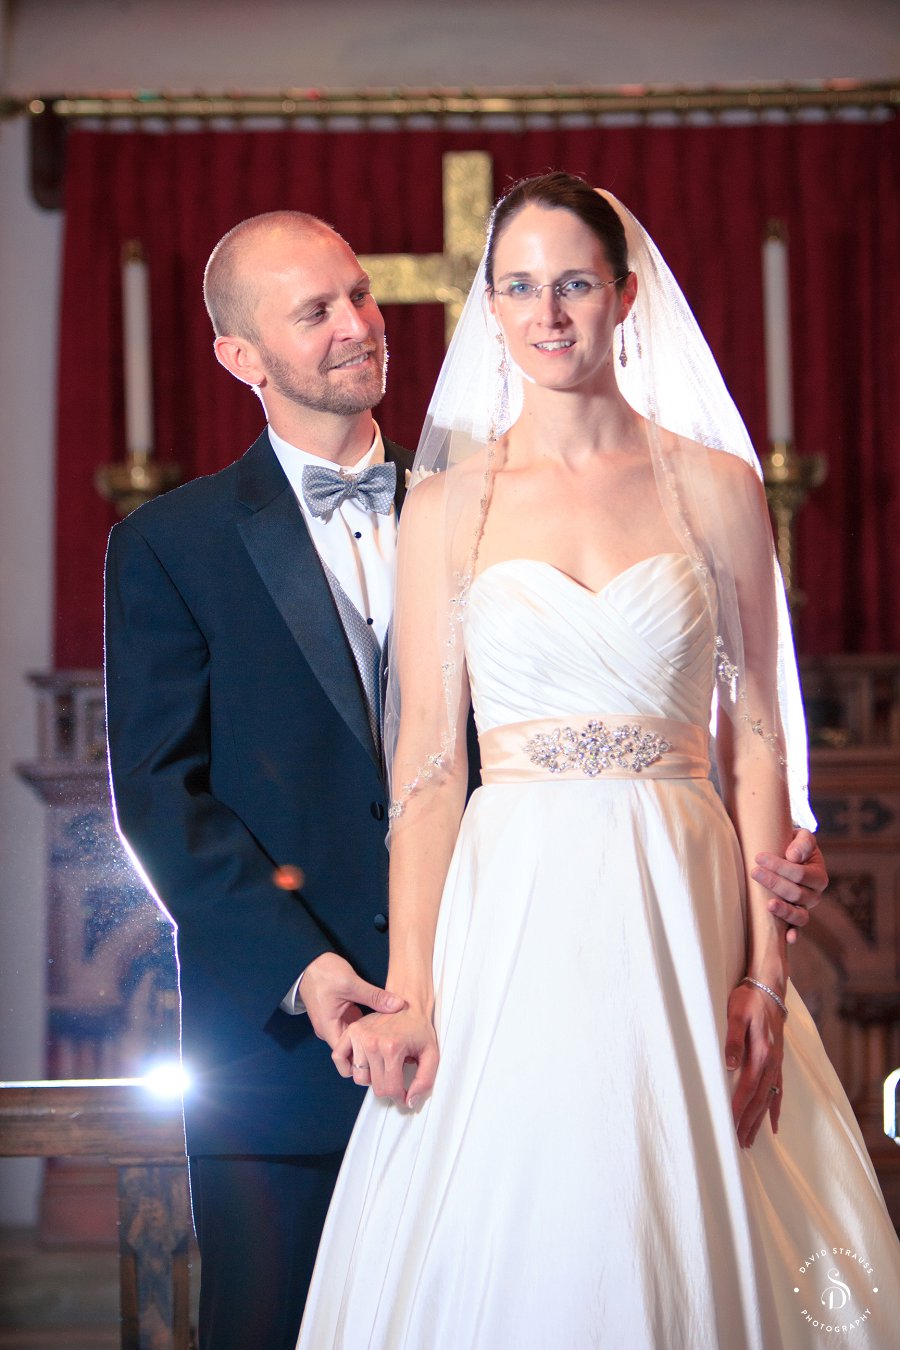 St. Lukes Chapel Wedding Ceremony - McCrady's Reception Venue - David Strauss Photography -6